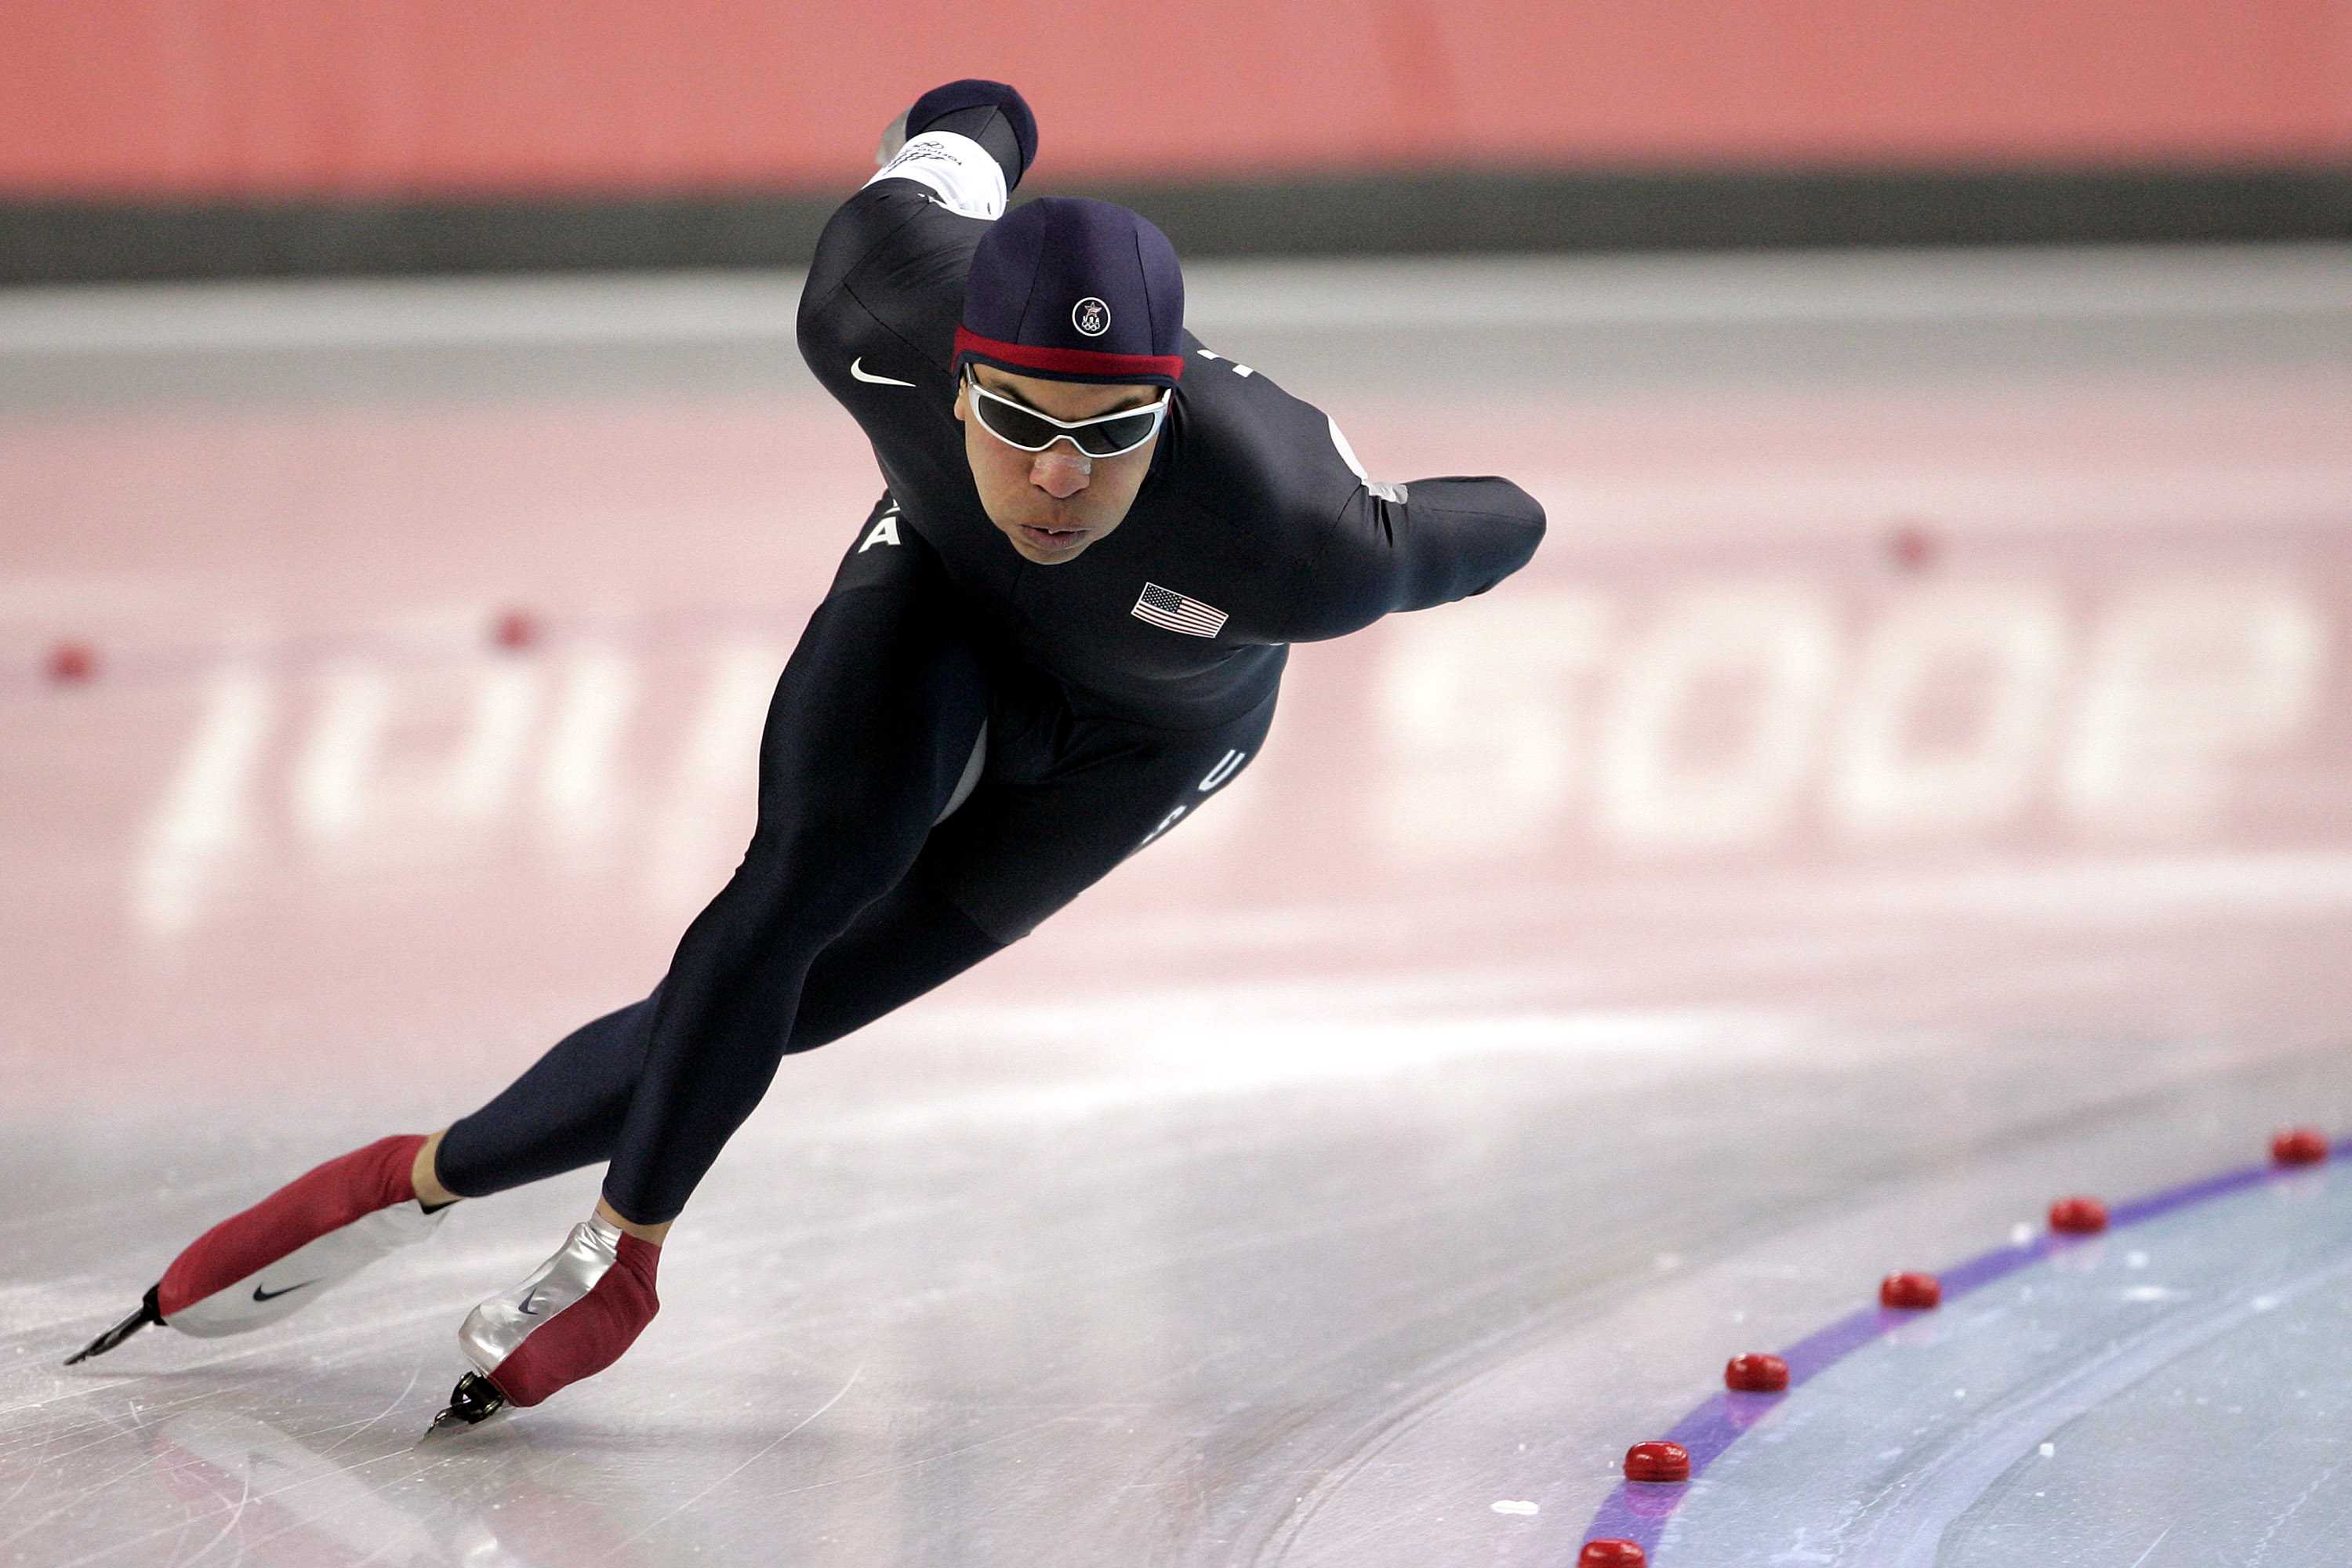 Derek Parra, Olympic Gold Medalist Speed Skater